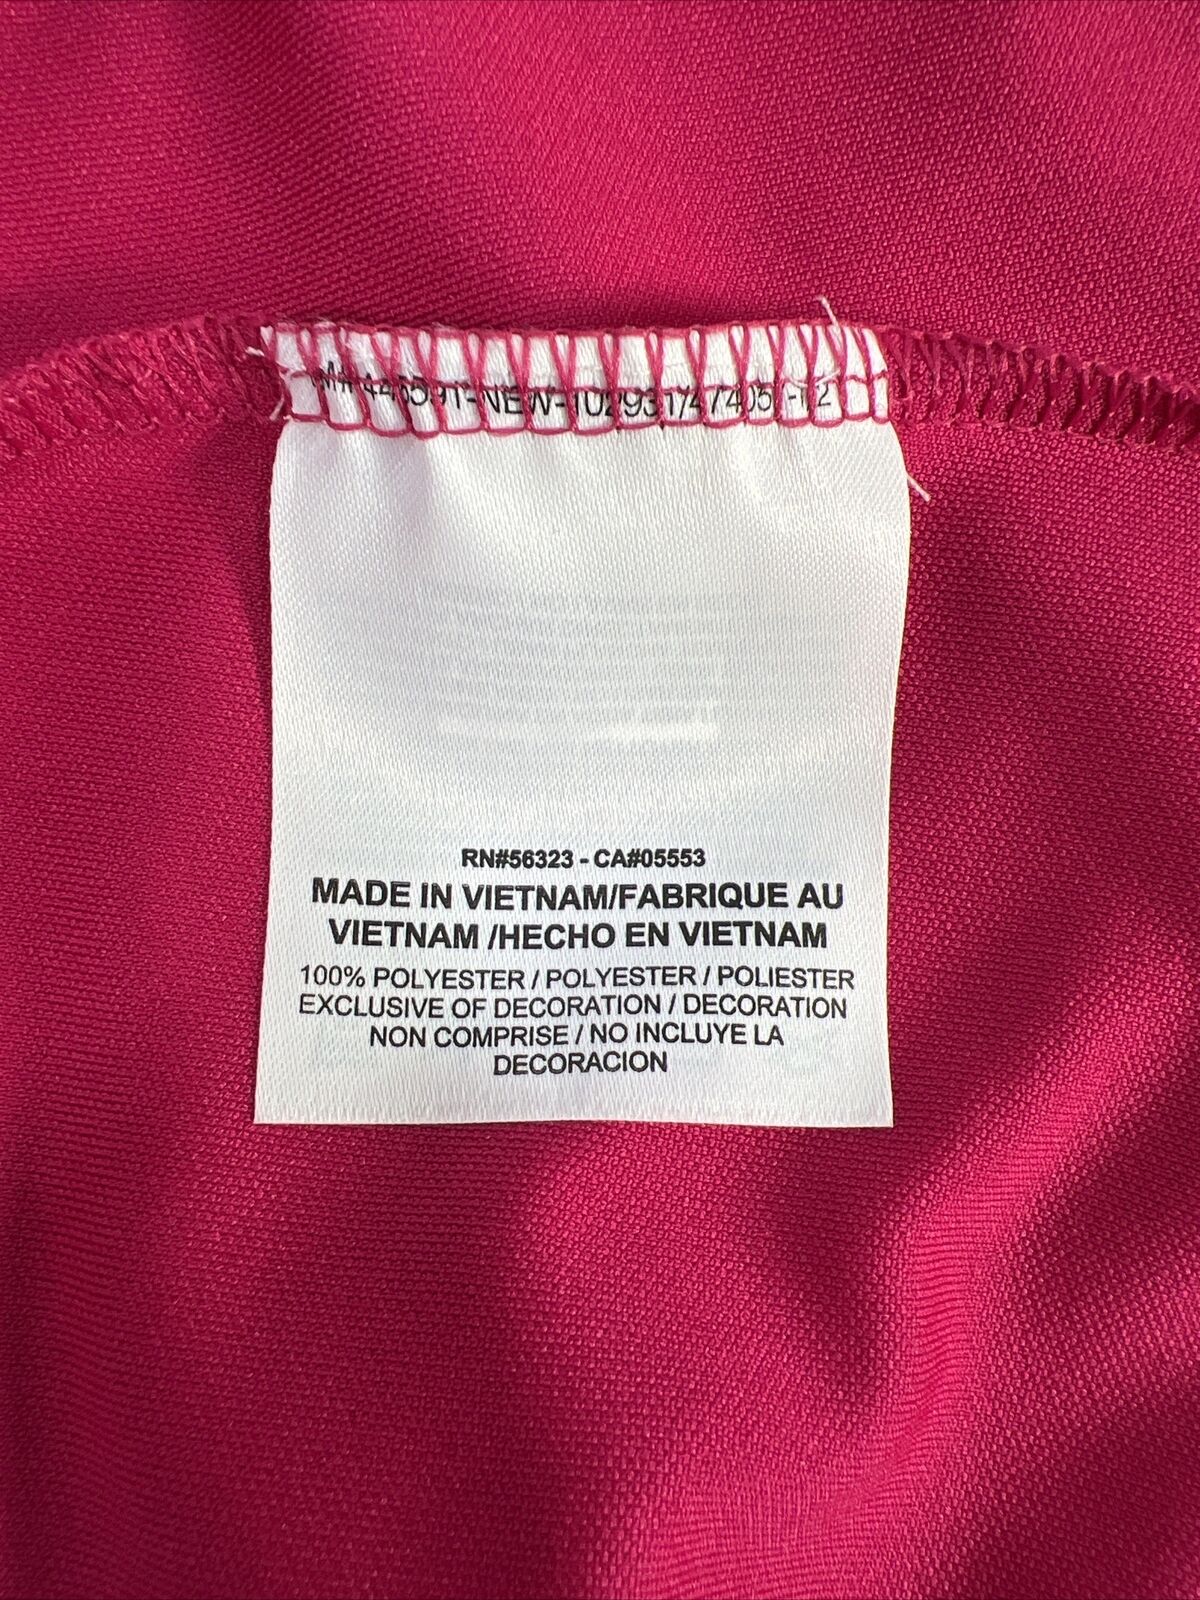 Nike Women's Pink Short Sleeve Golf Polo Shirt - S